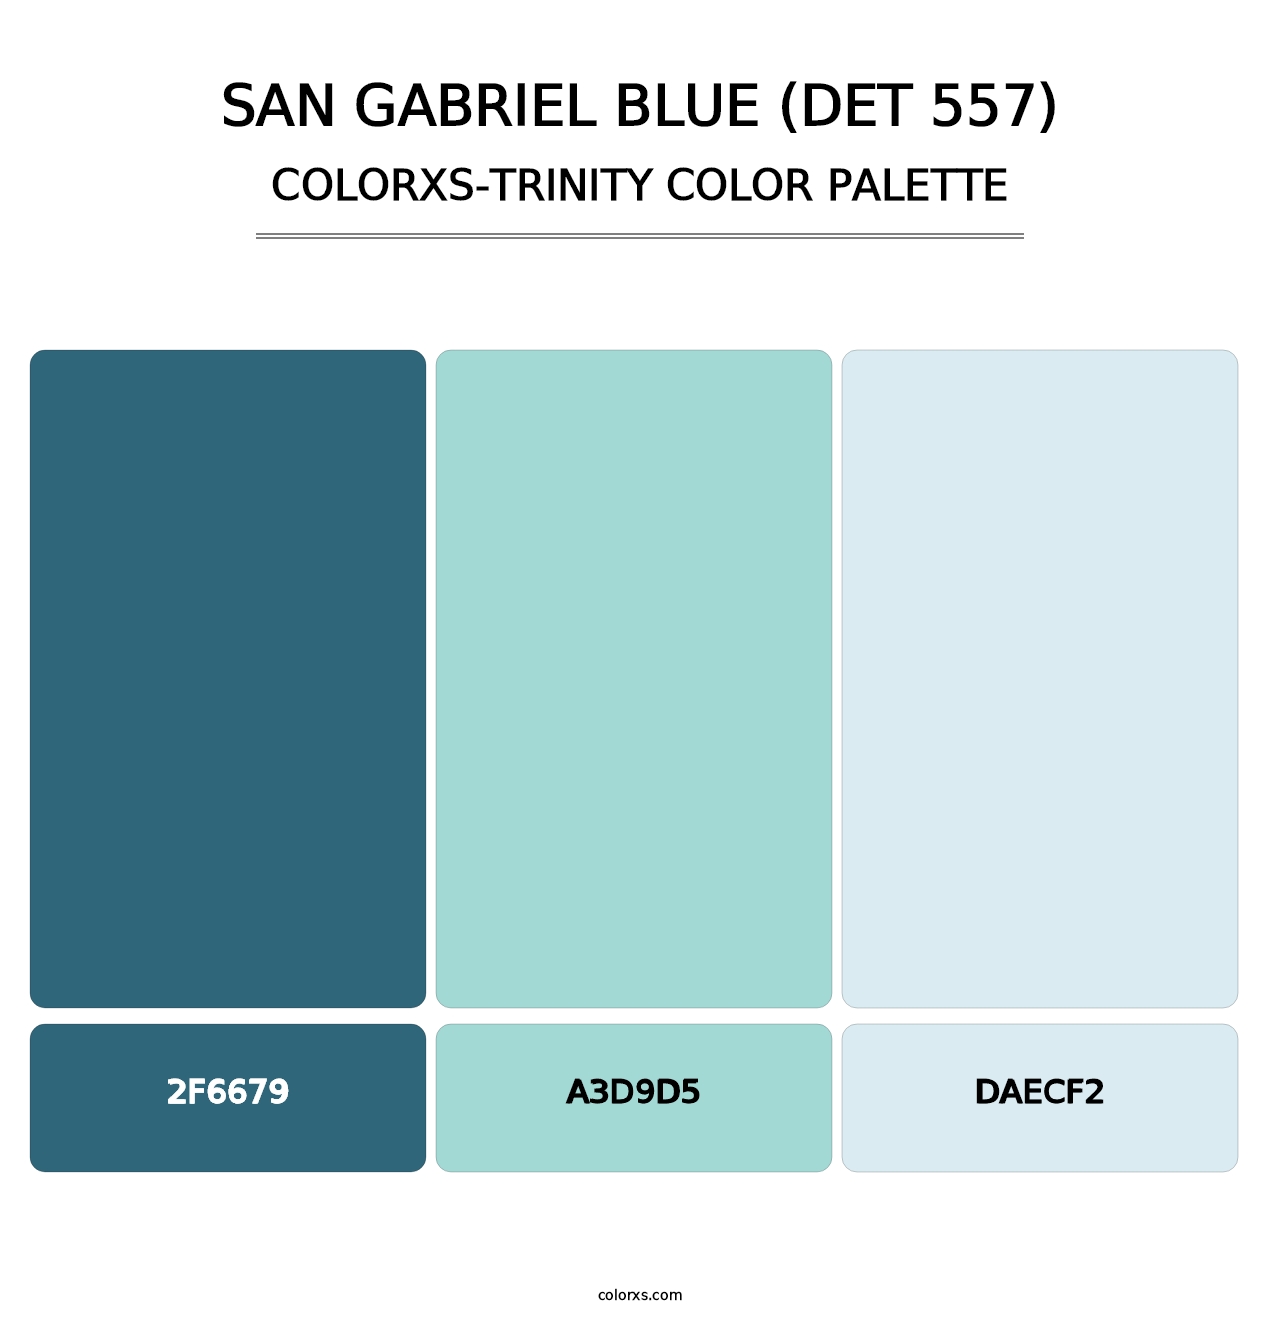 San Gabriel Blue (DET 557) - Colorxs Trinity Palette